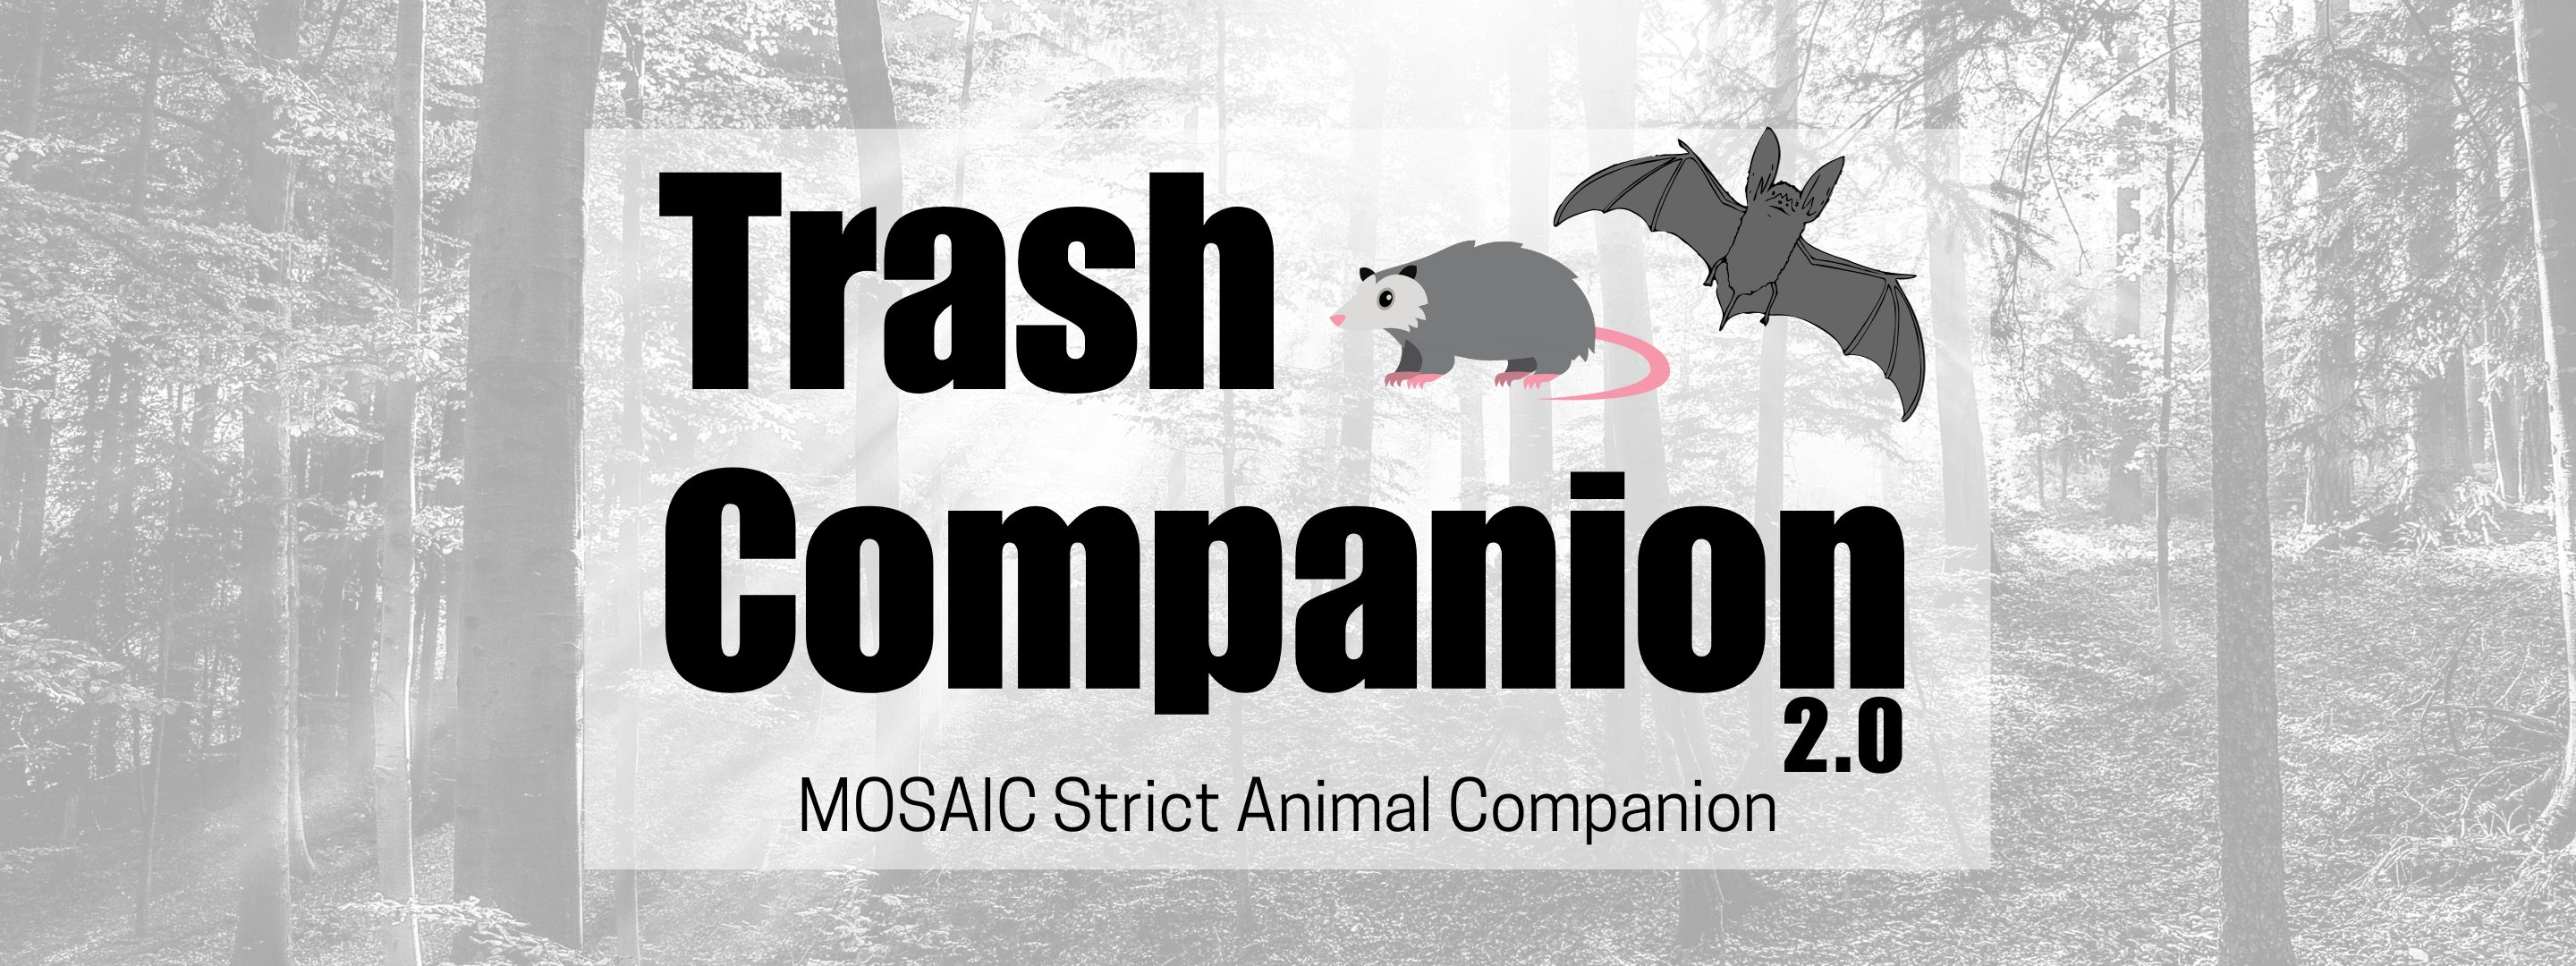 Trash Companion 2.0